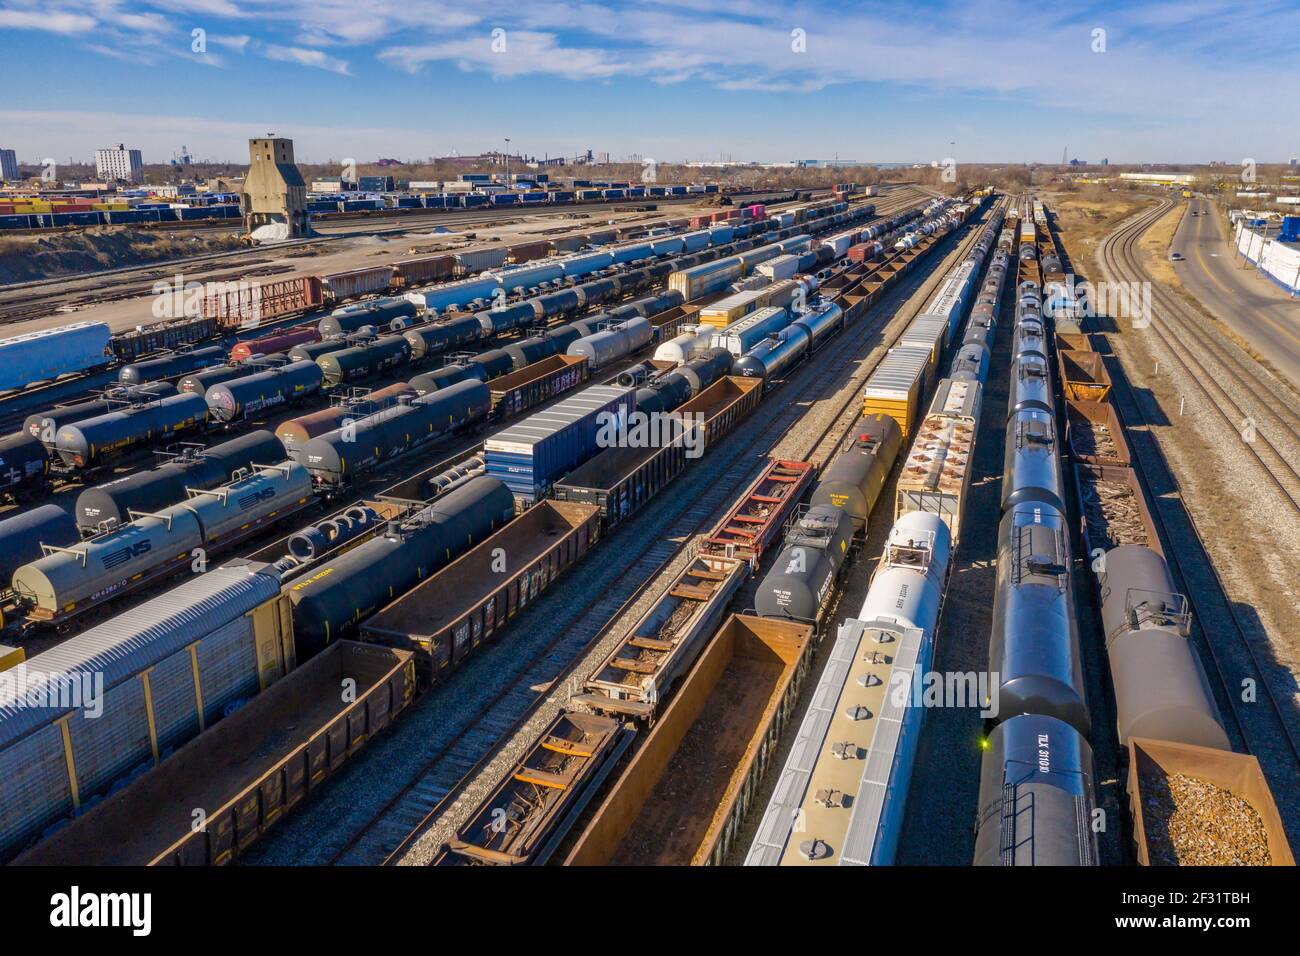 Detroit, Michigan - Railroad cars waiting at a rail yard in southwest Detroit. Stock Photo